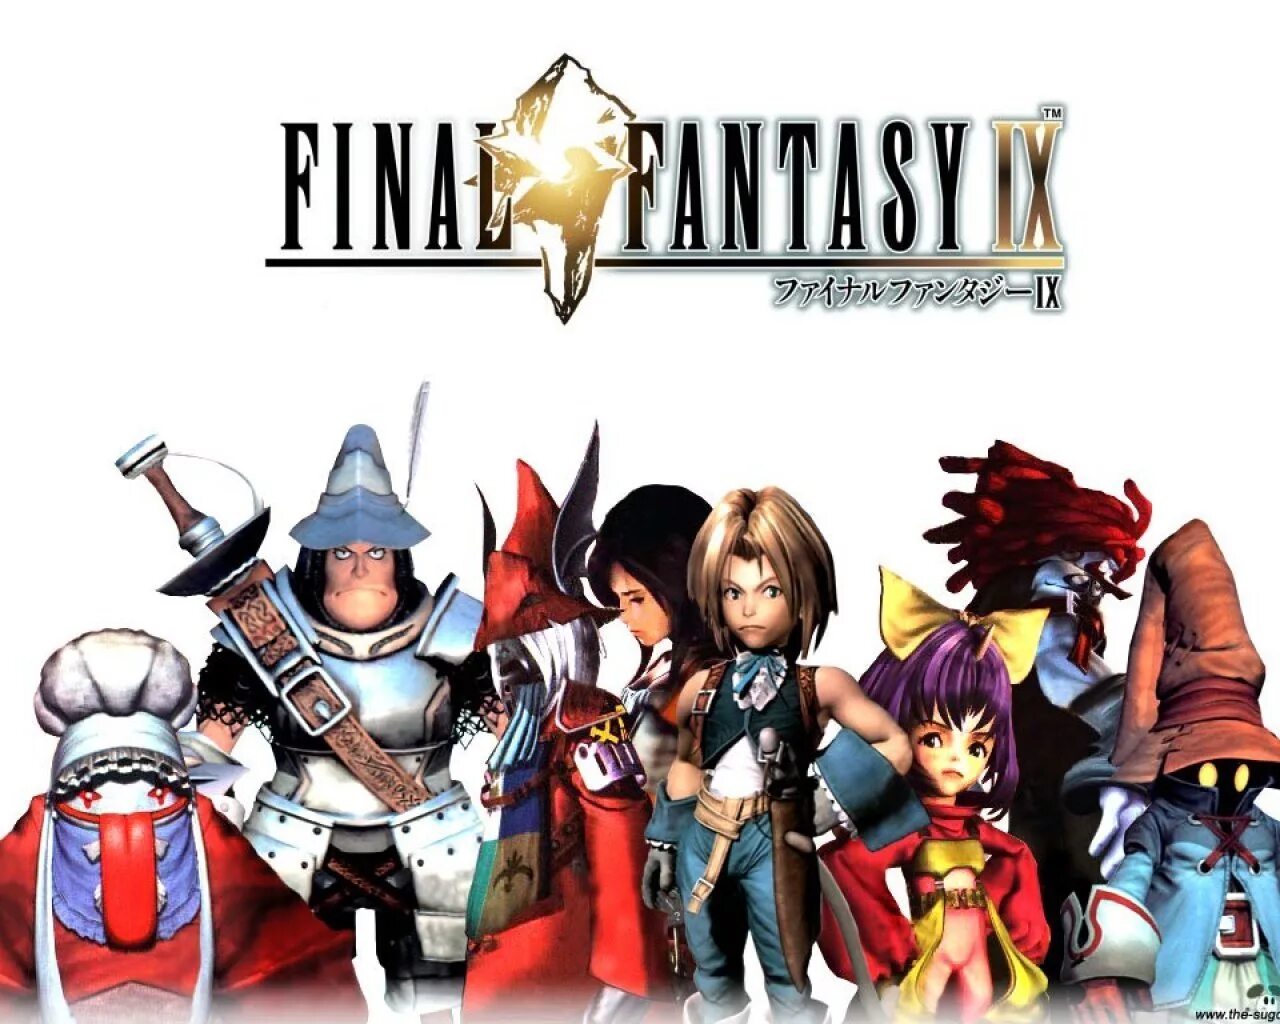 Www final. Final Fantasy IX обложка. Final Fantasy 9 ps1 обложка. Final Fantasy IX ps4. Final Fantasy IX (2000).